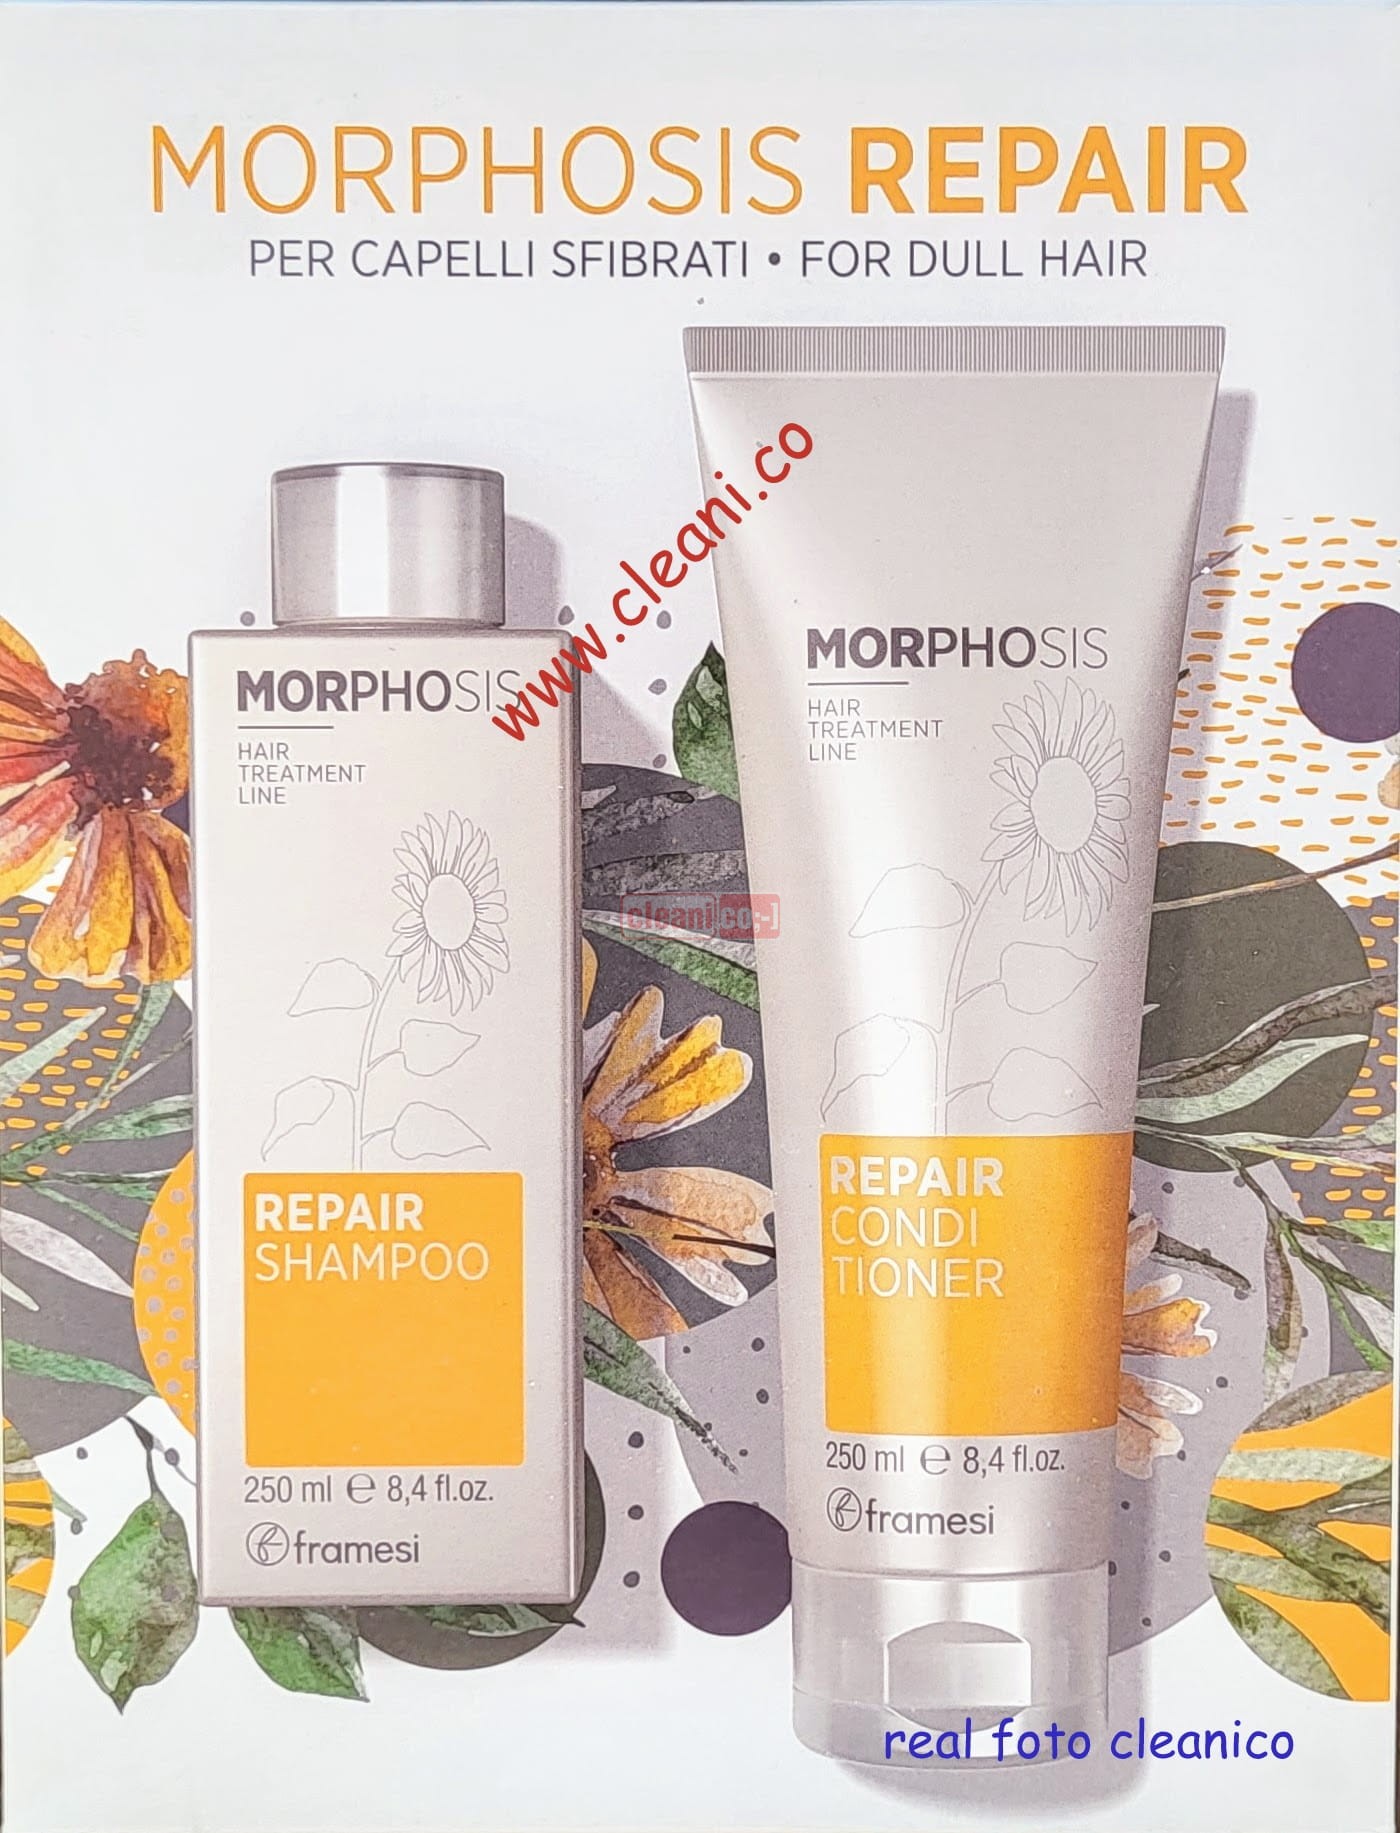 morphosis szampon